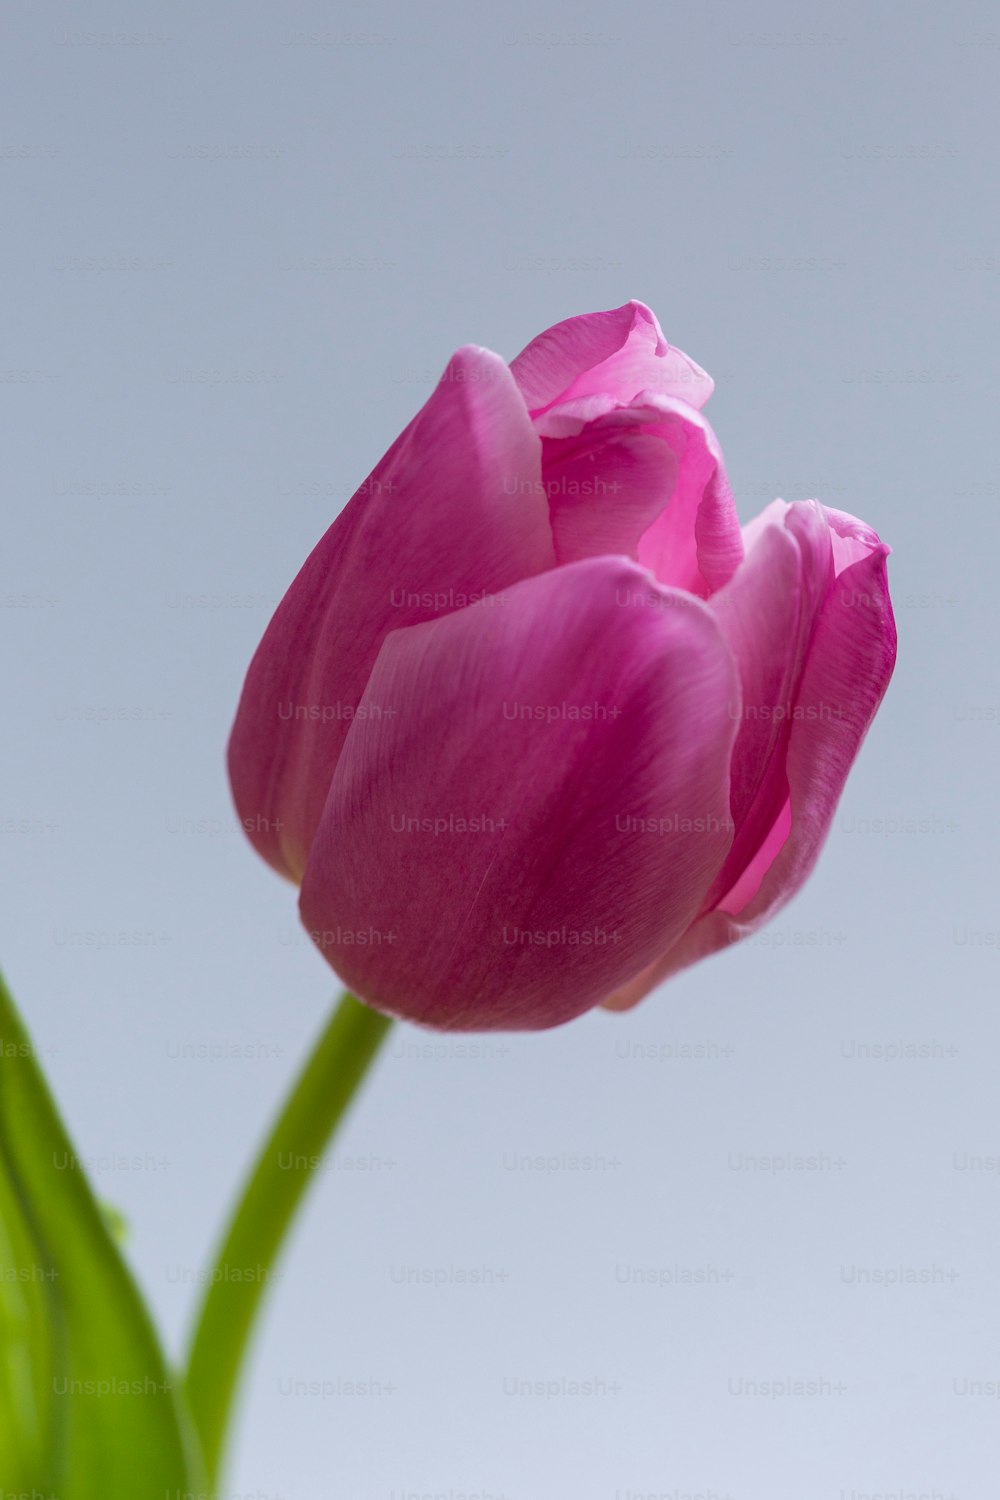 Tulip Flower Pictures | Download Free Images on Unsplash